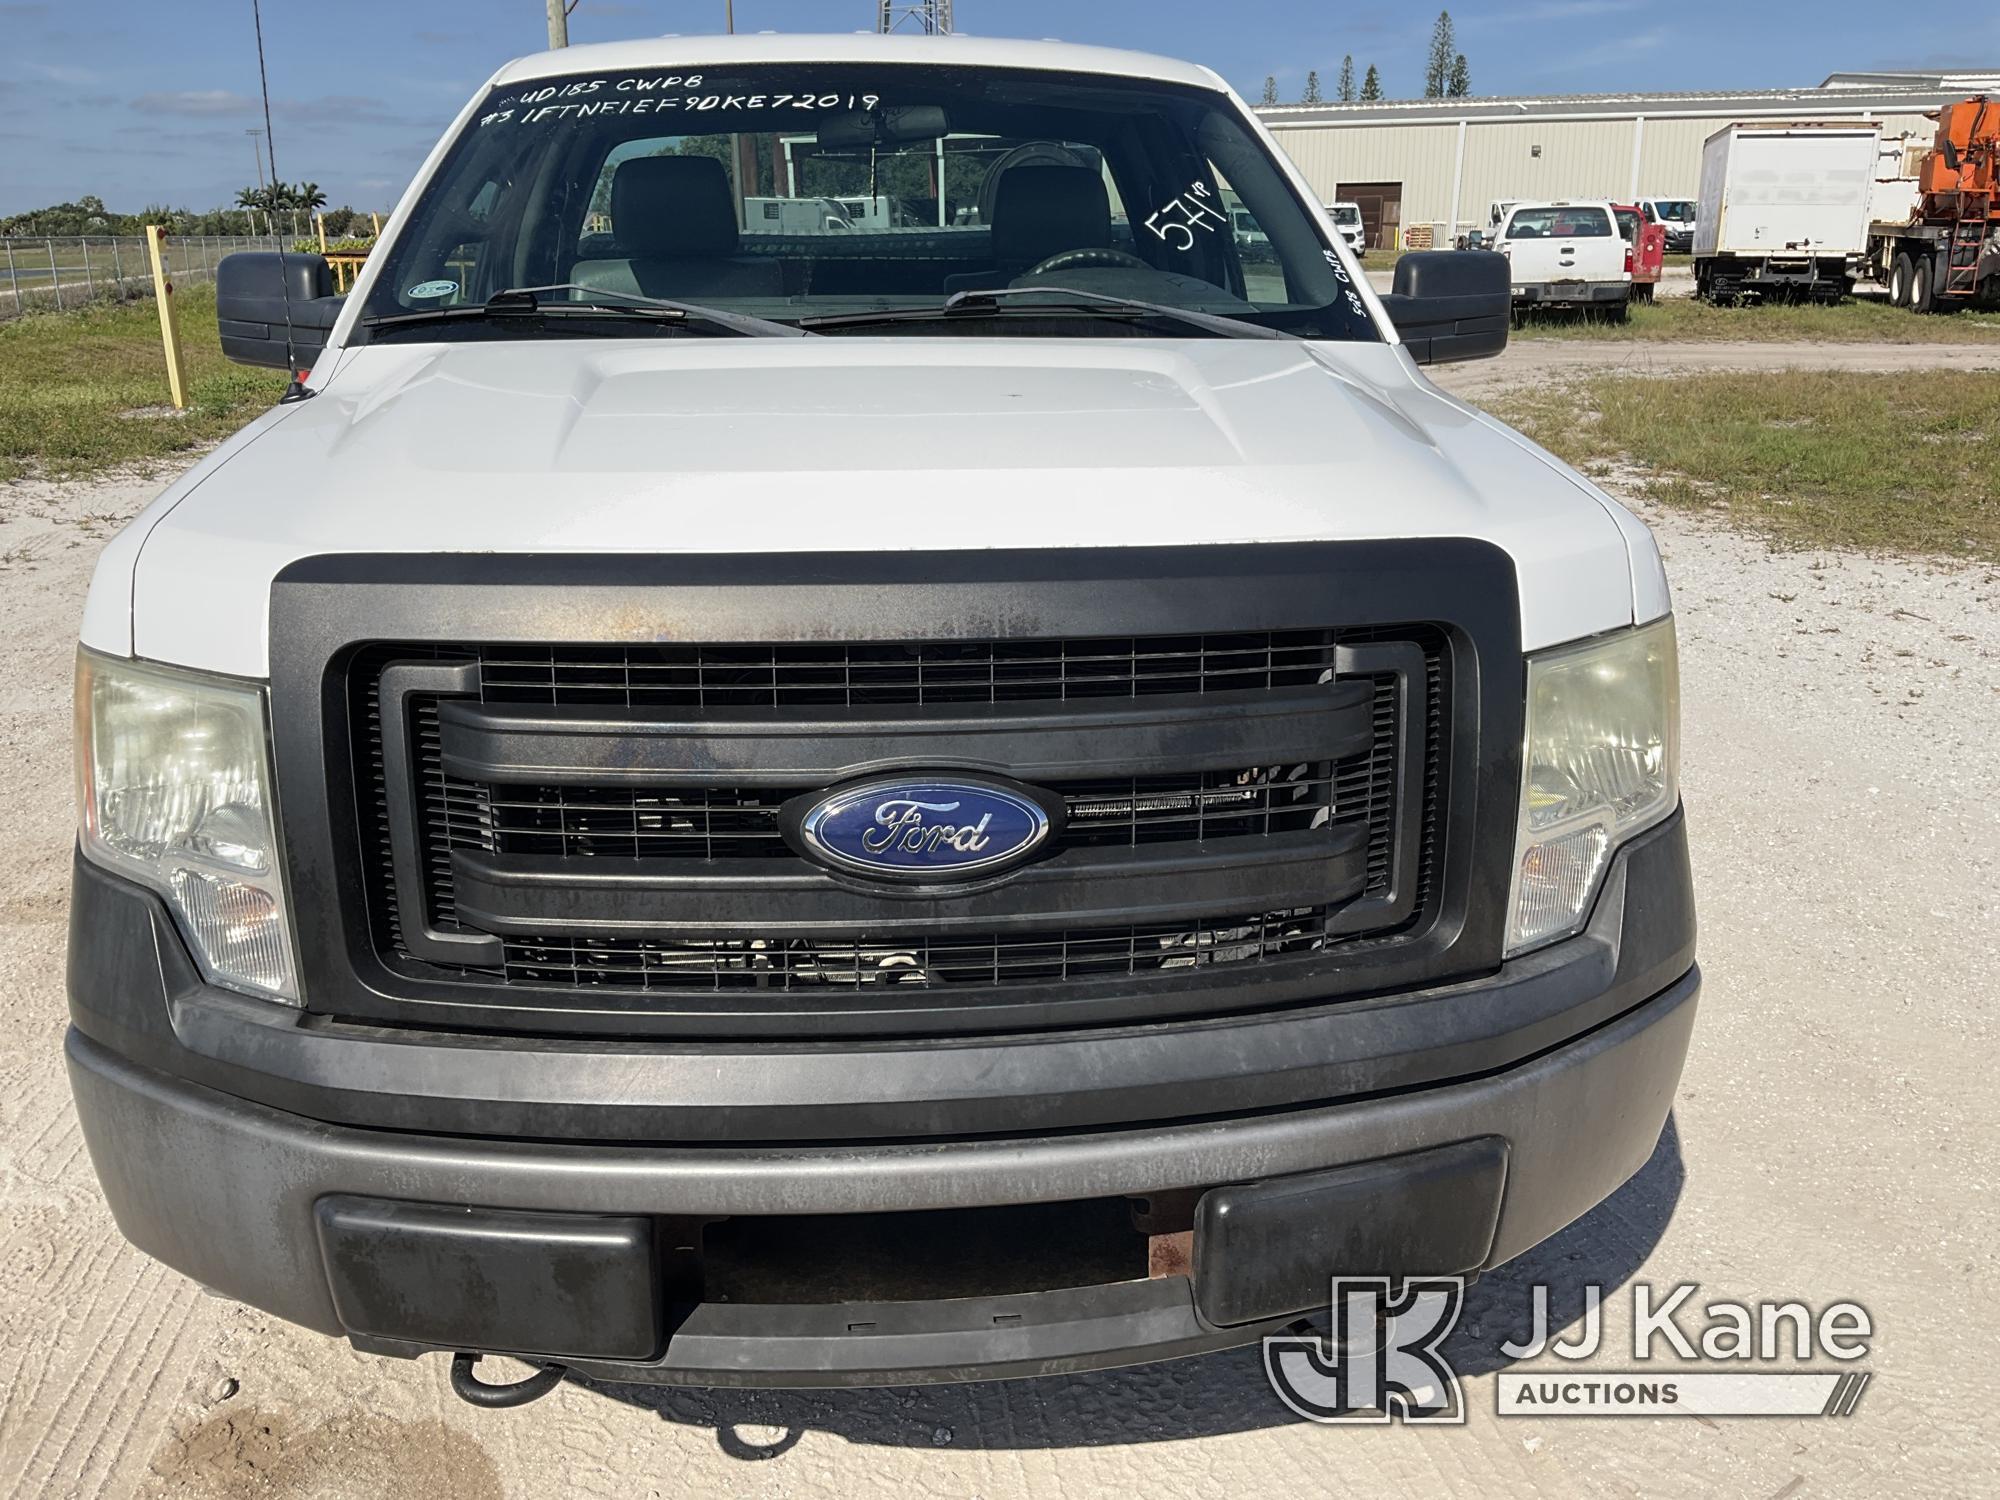 (Westlake, FL) 2013 Ford F150 4x4 Pickup Truck Runs & Moves, Body Damage & Rust) (FL Residents Purch